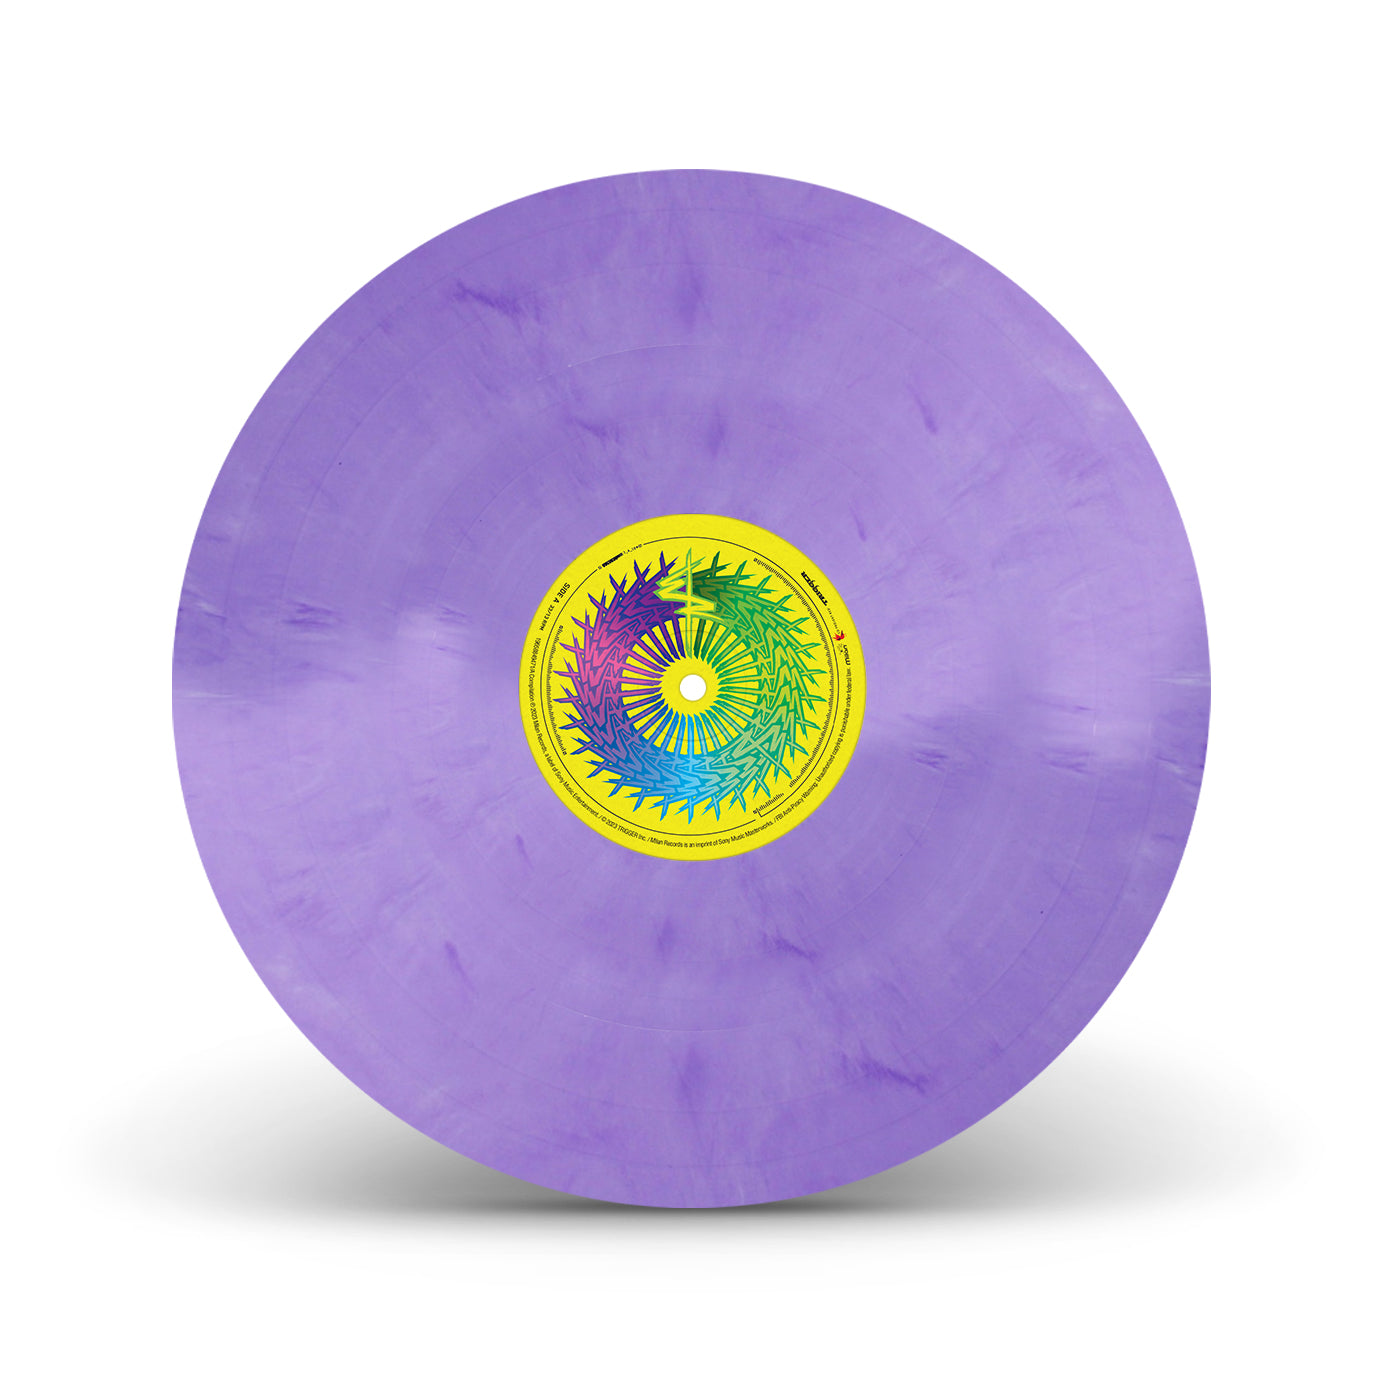 Akira Yamaoka & Marcin Przybylowicz -  Cyberpunk-  Edgerunners (OST): Purple Marbled Vinyl LP